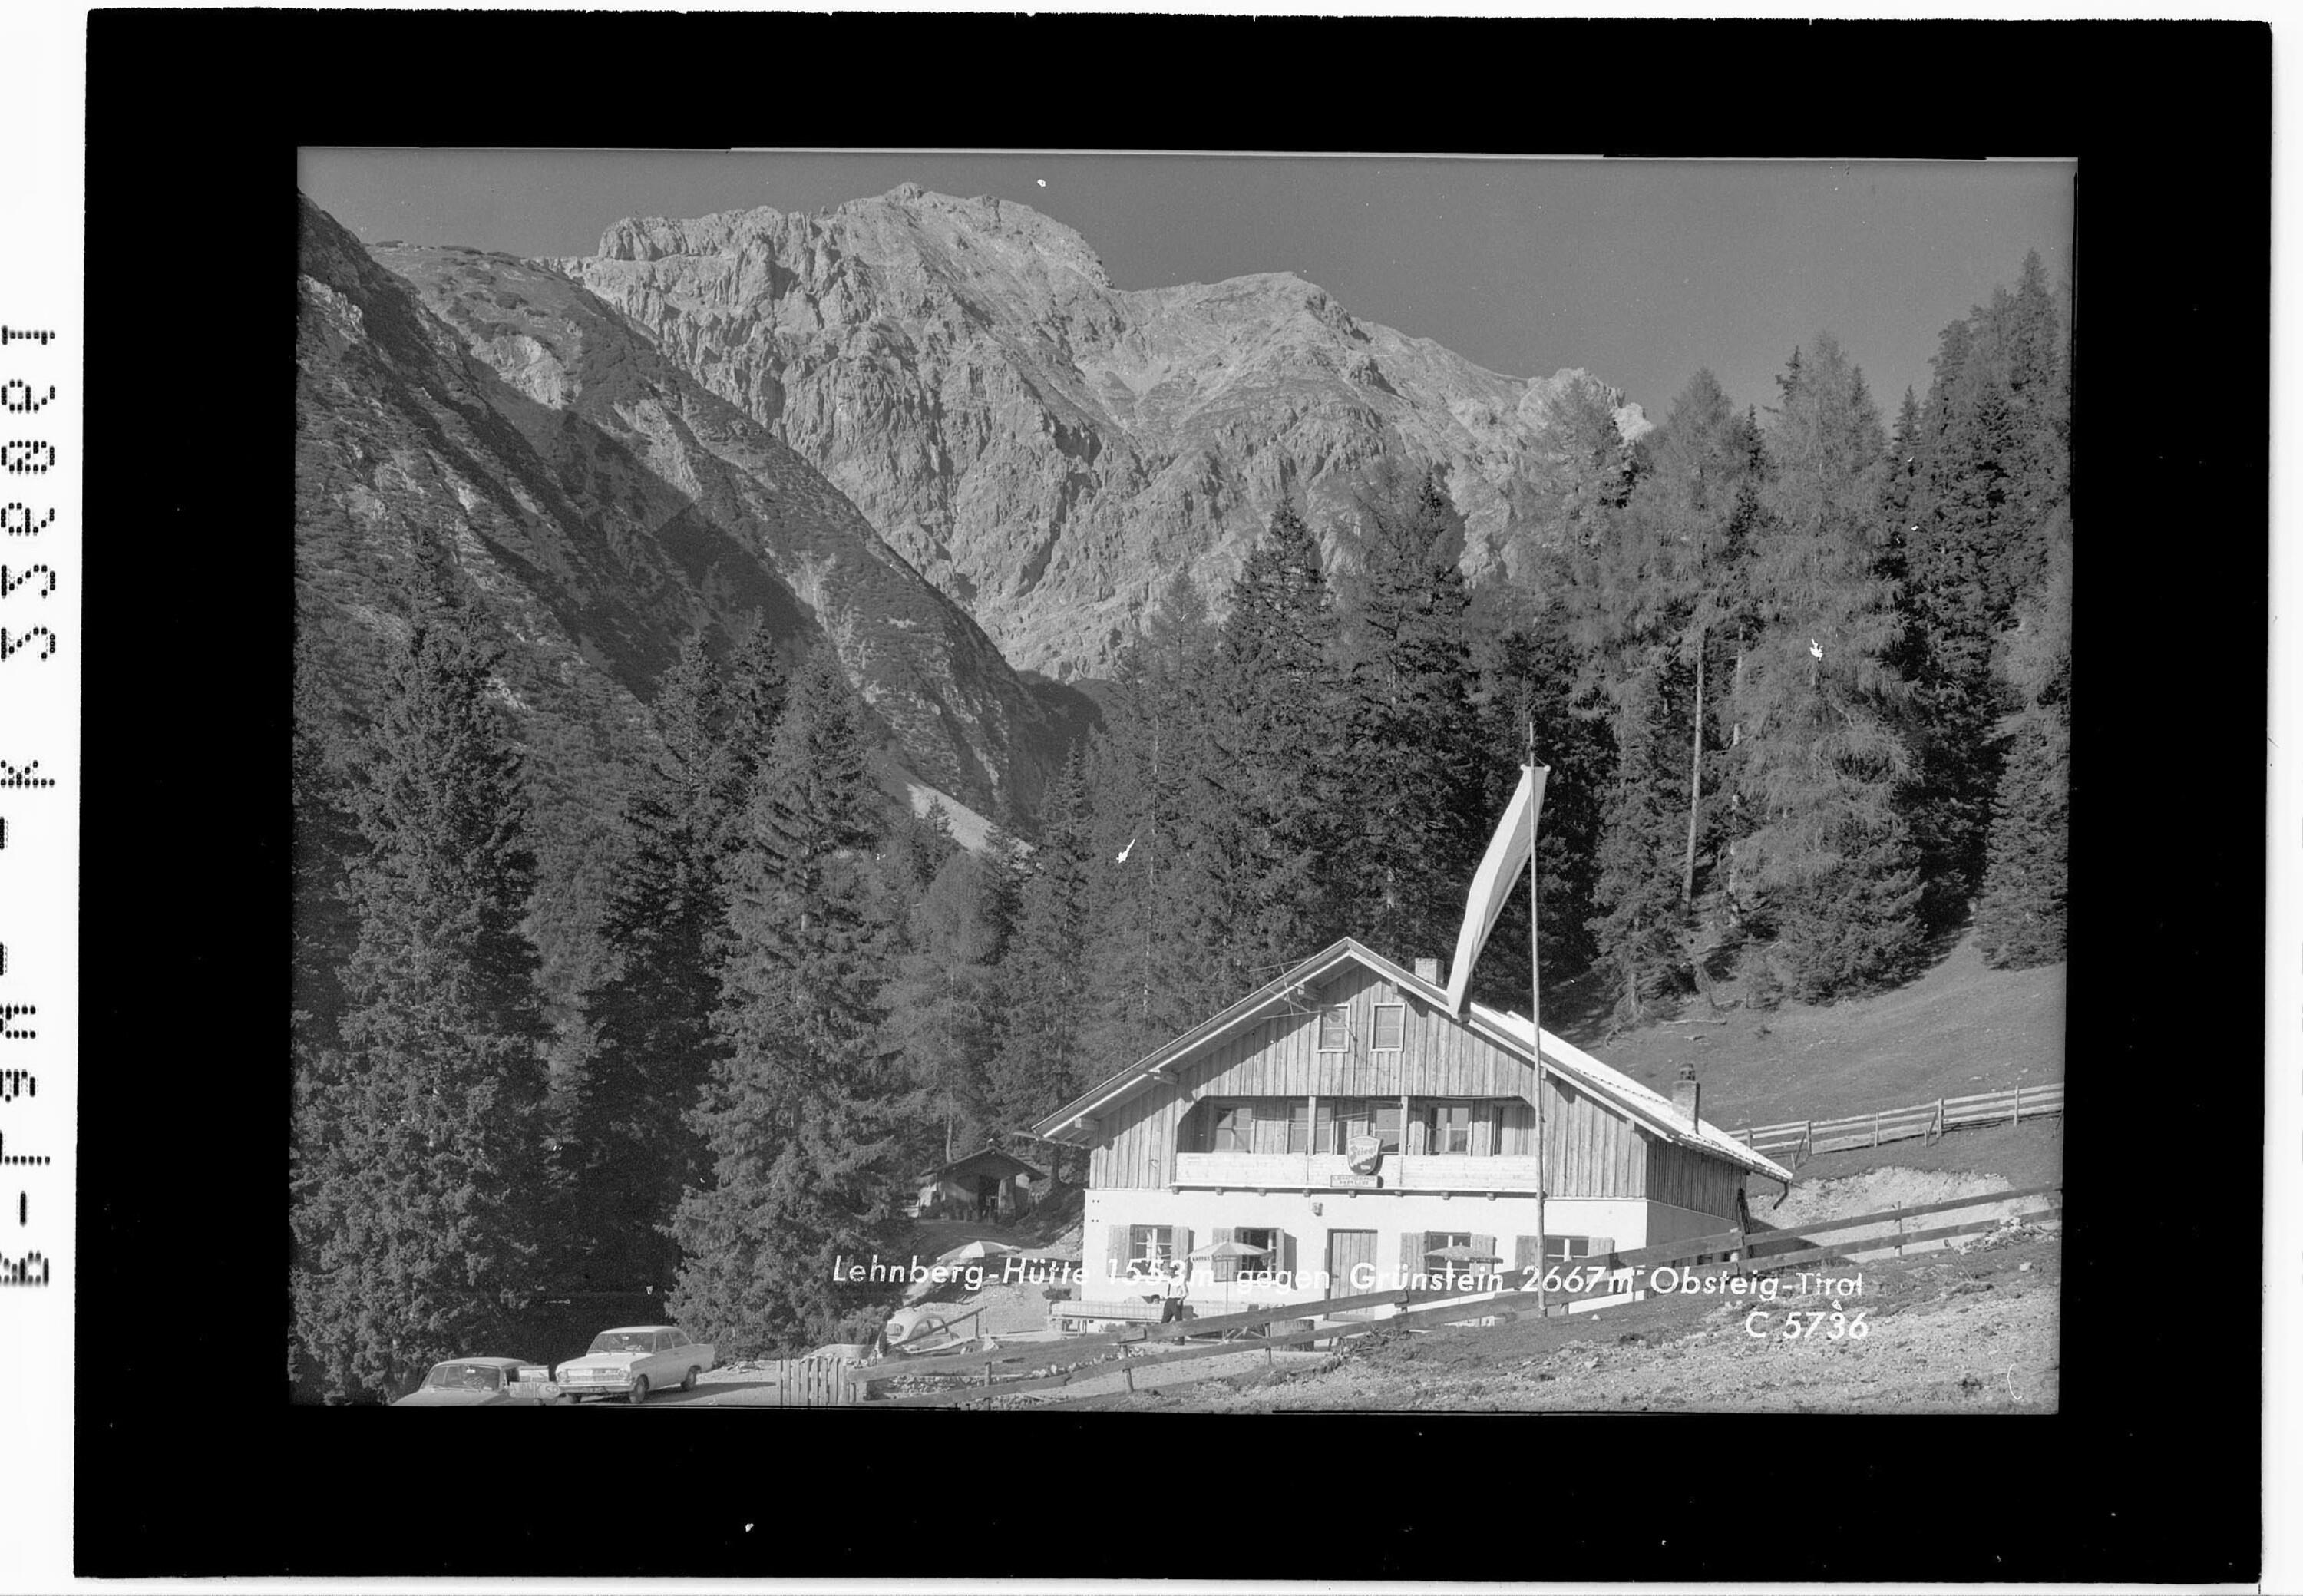 Lehnberg Hütte 1553 m gegen Grünstein 2667 m / Obsteig - Tirol></div>


    <hr>
    <div class=